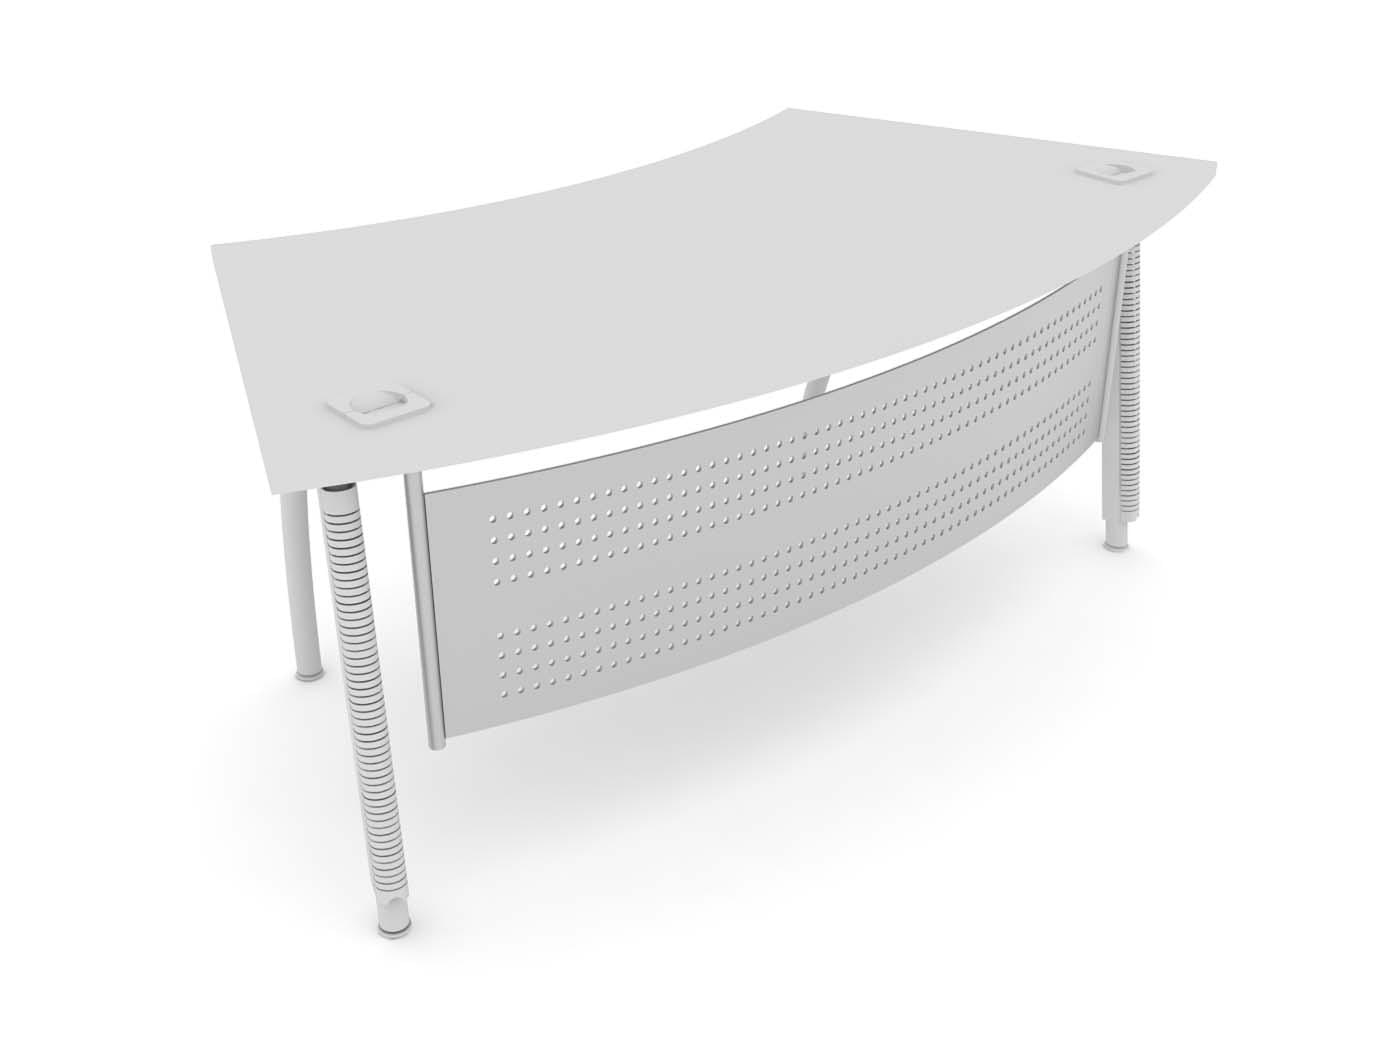 Callisto Curved Desk Modesty Panel